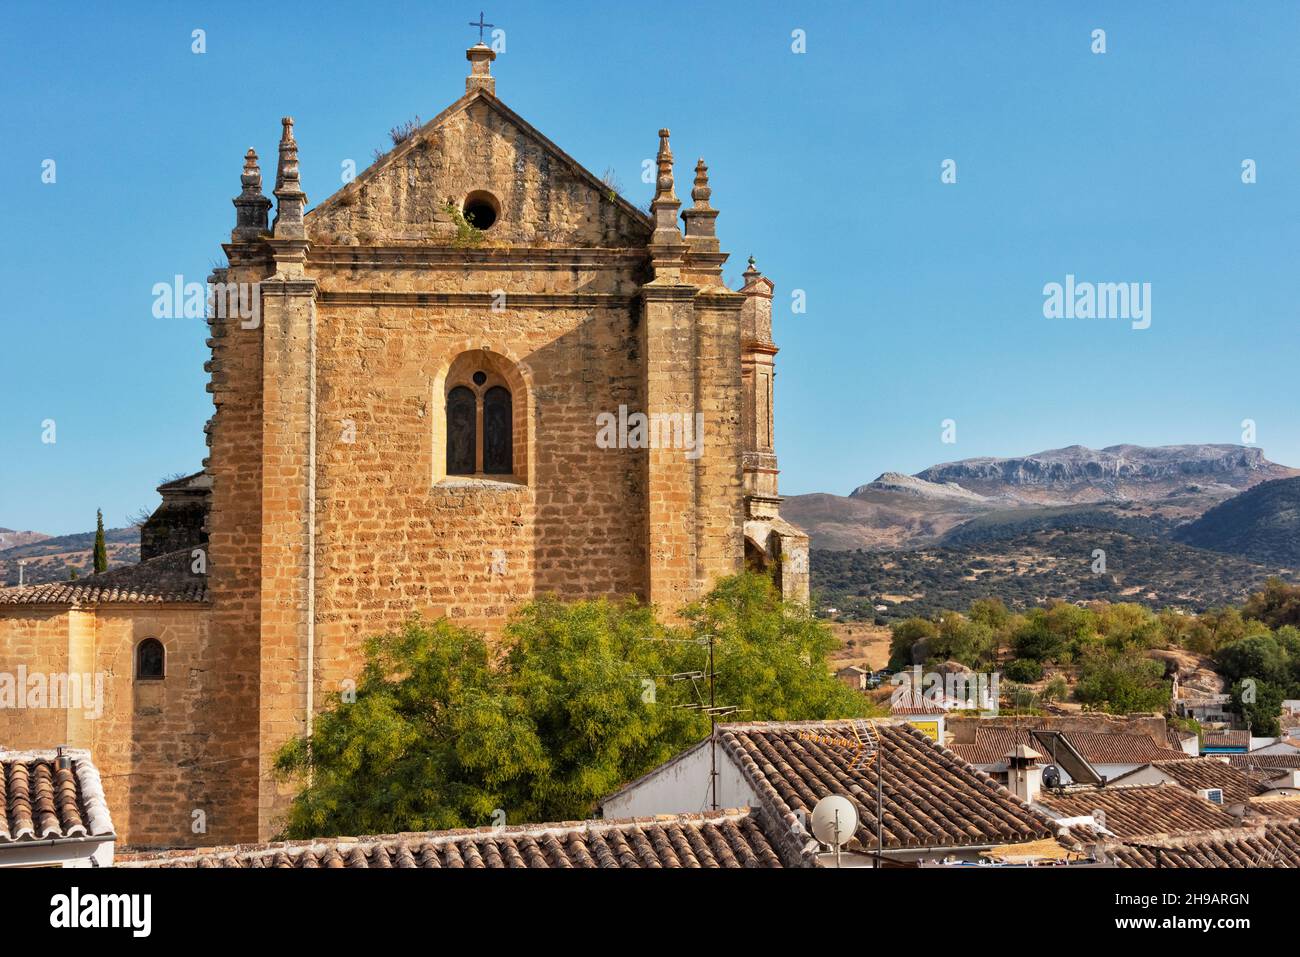 Church of the Holy Spirit, Ronda, Malaga Province, Andalusia Autonomous Community, Spain Stock Photo